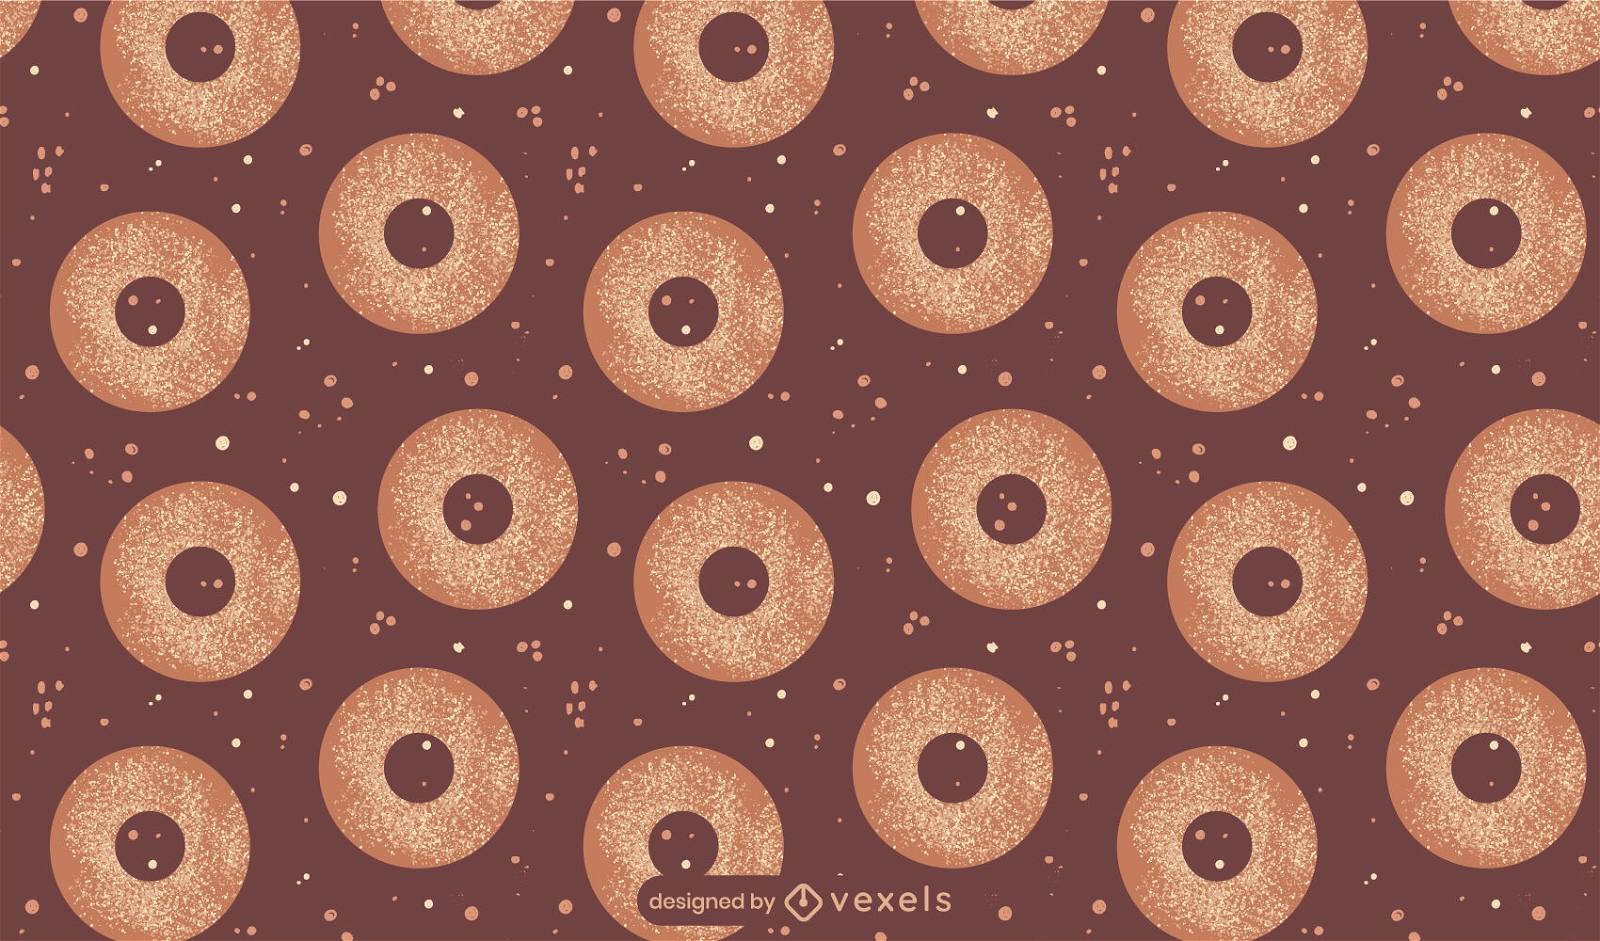 Glazed donuts sweet food pattern design